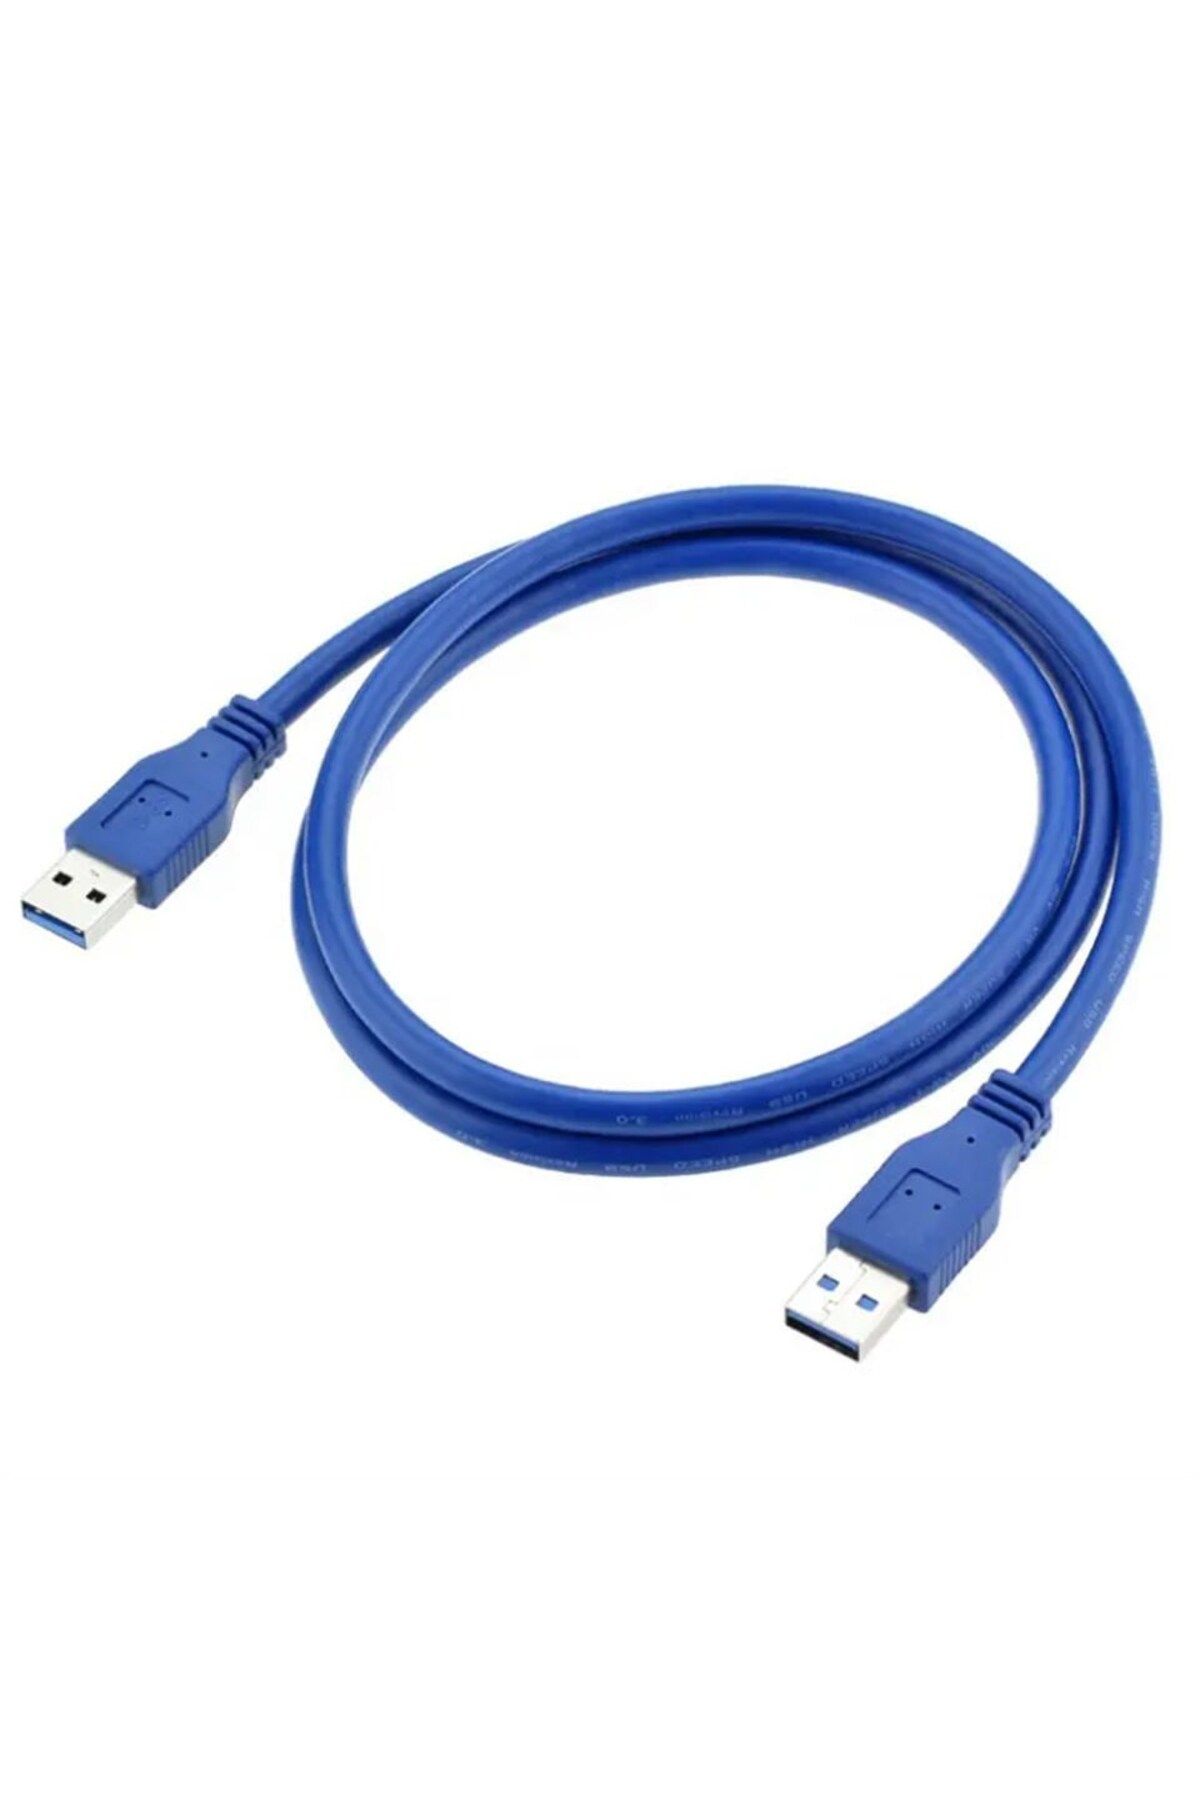 Concord C5602 50 Cm iki Ucu Erkek Çift Taraflı USB 3.0 to USB Kablo